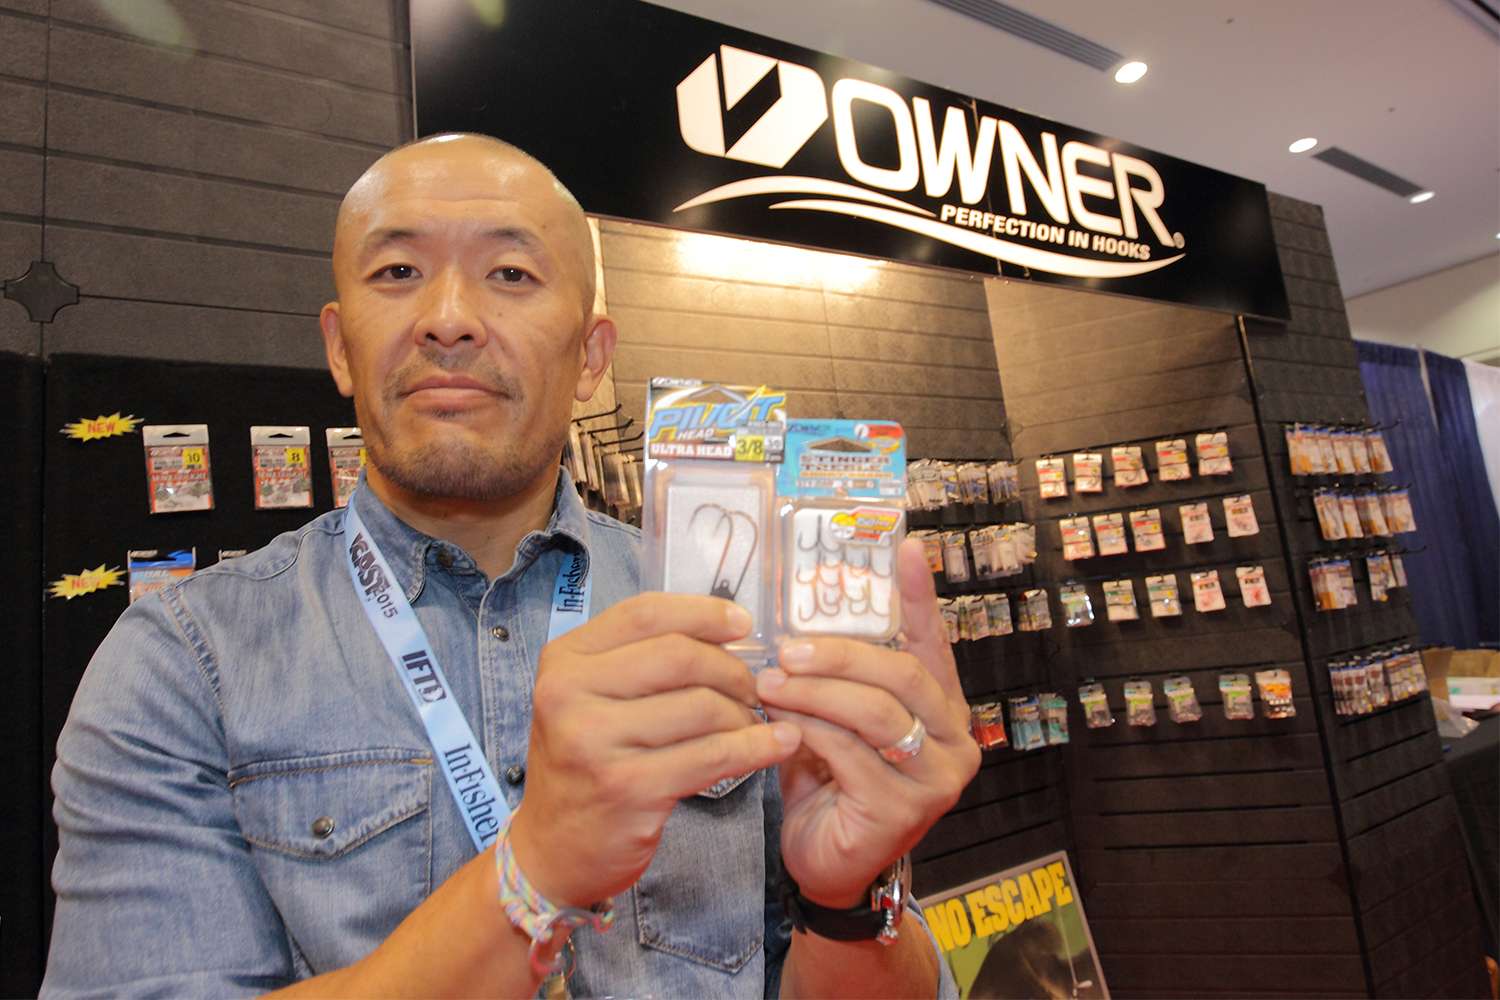  Masato Soyama, sales manager of Owner hooks, keeps thing sharp.